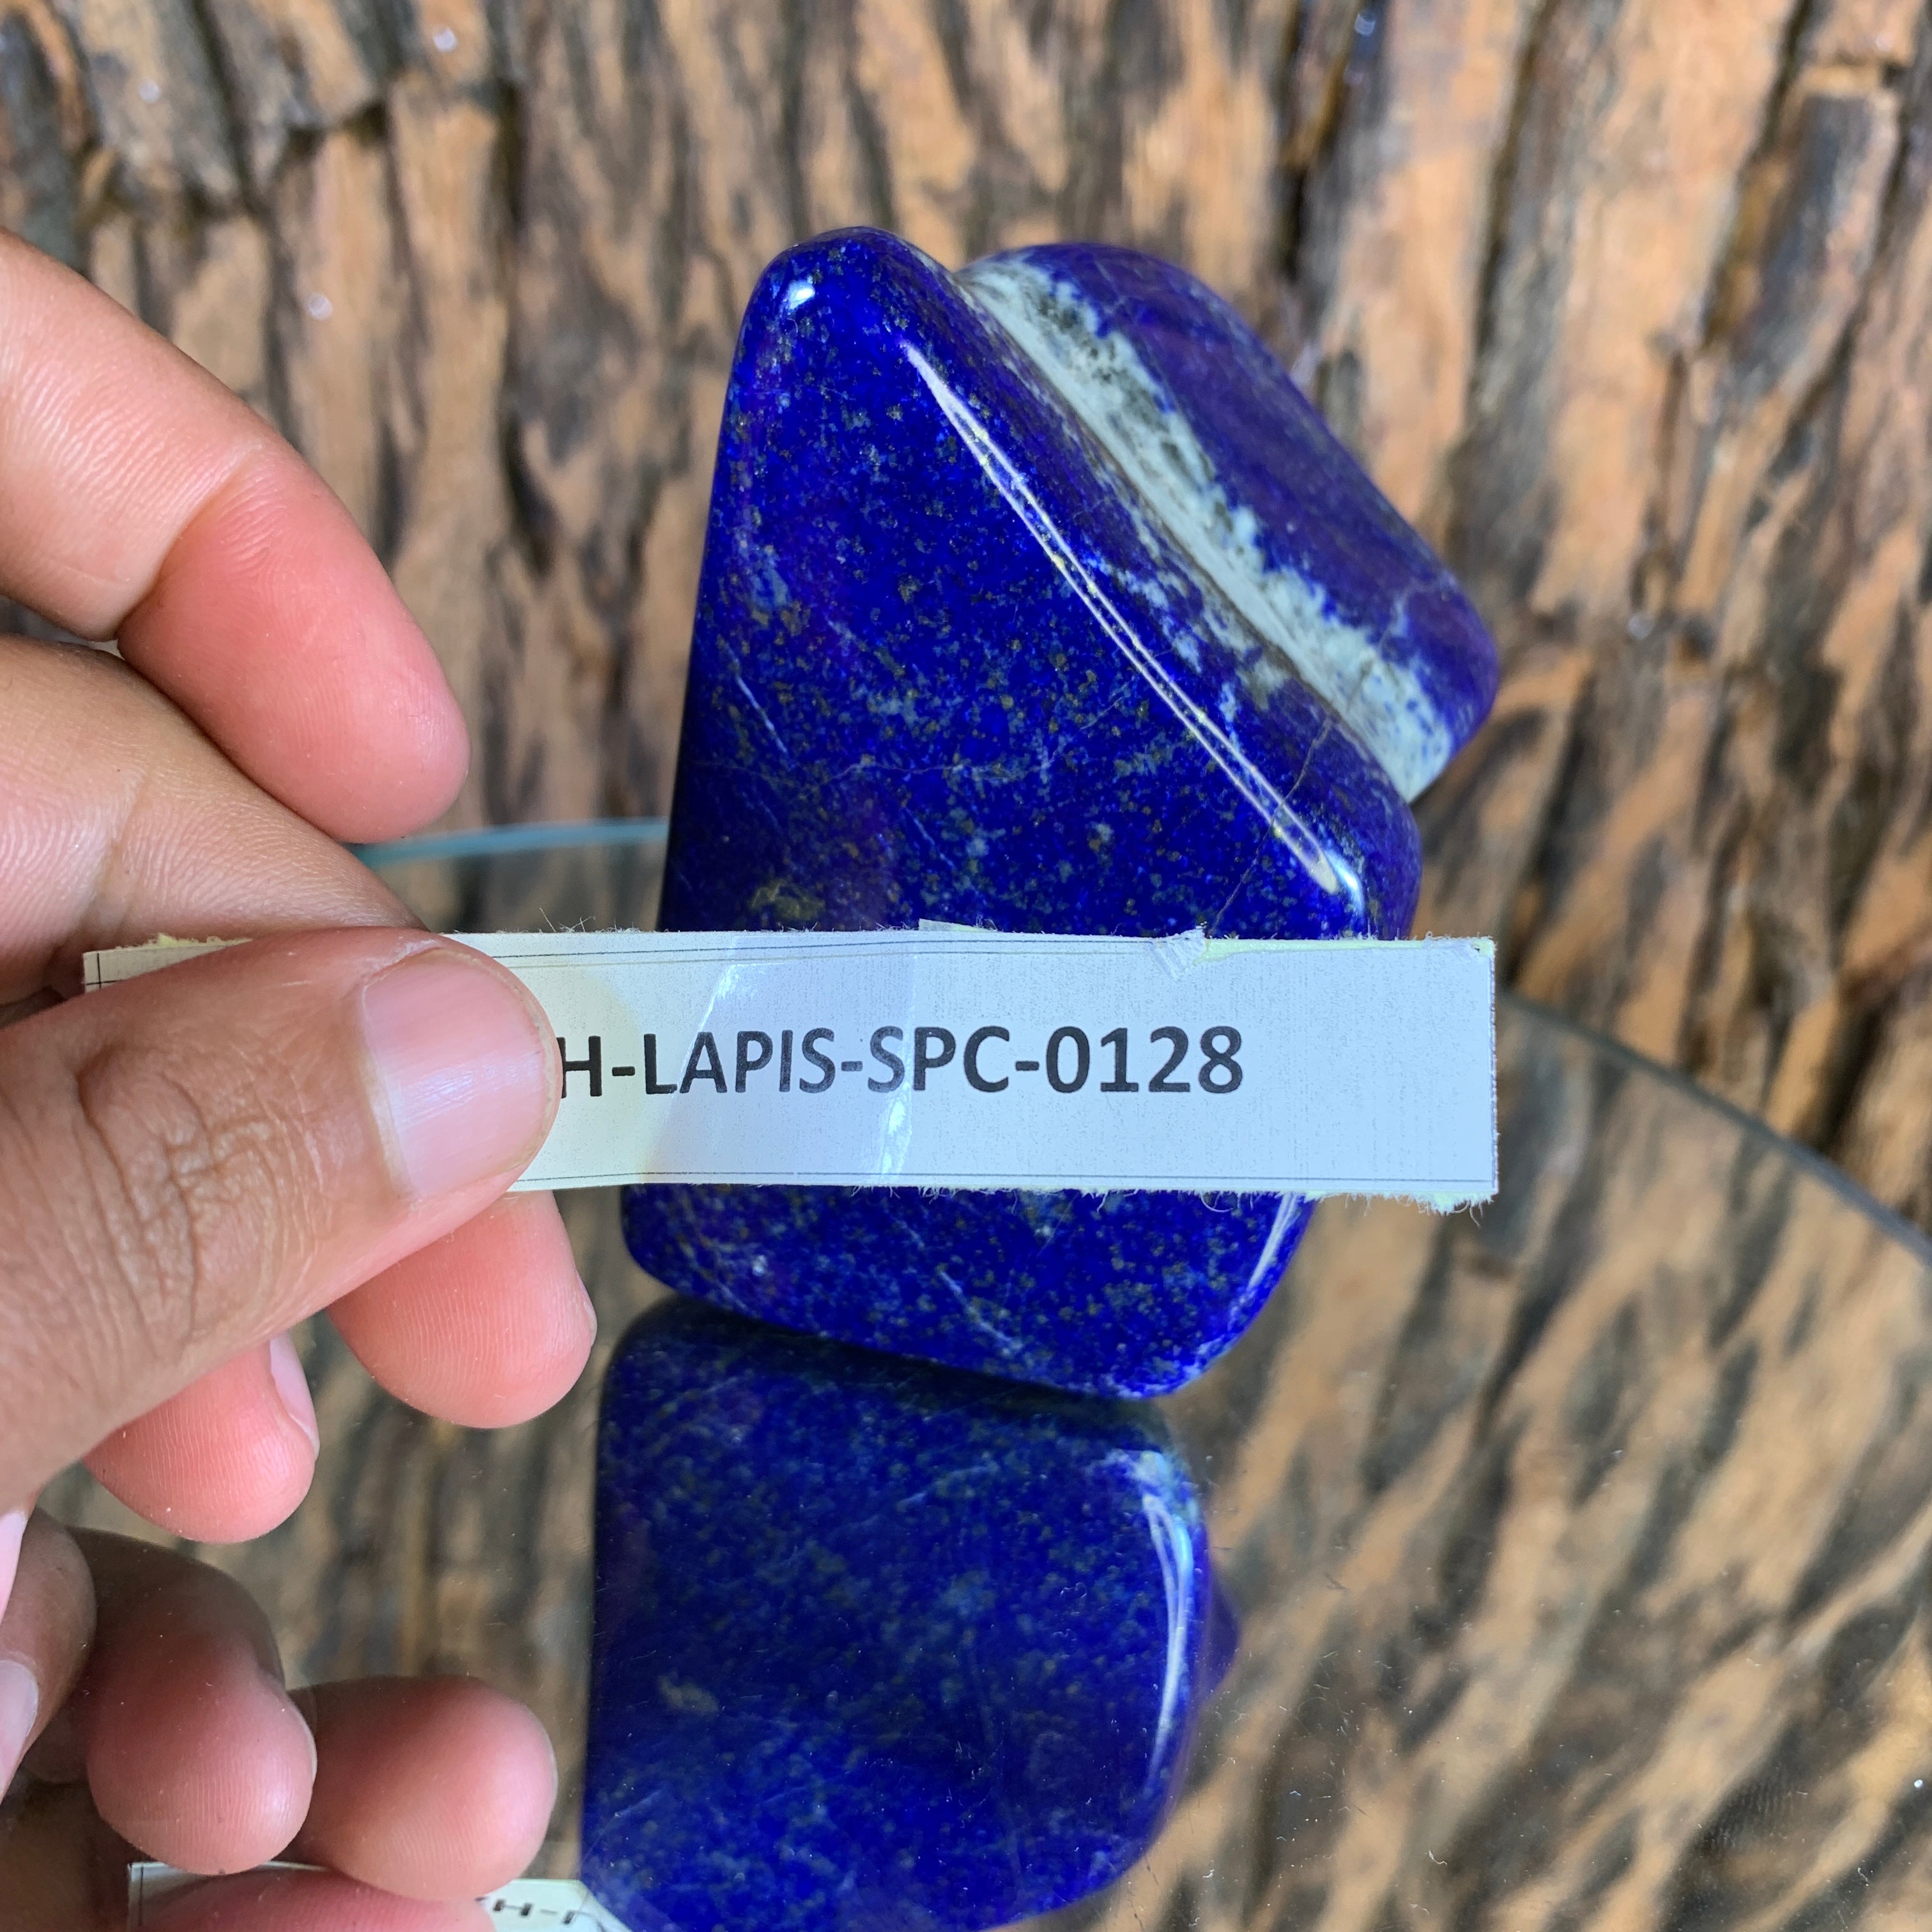 391.0g 8x5x5cm Dark Blue Lapis Lazuli Natural Shape from Afghanistan